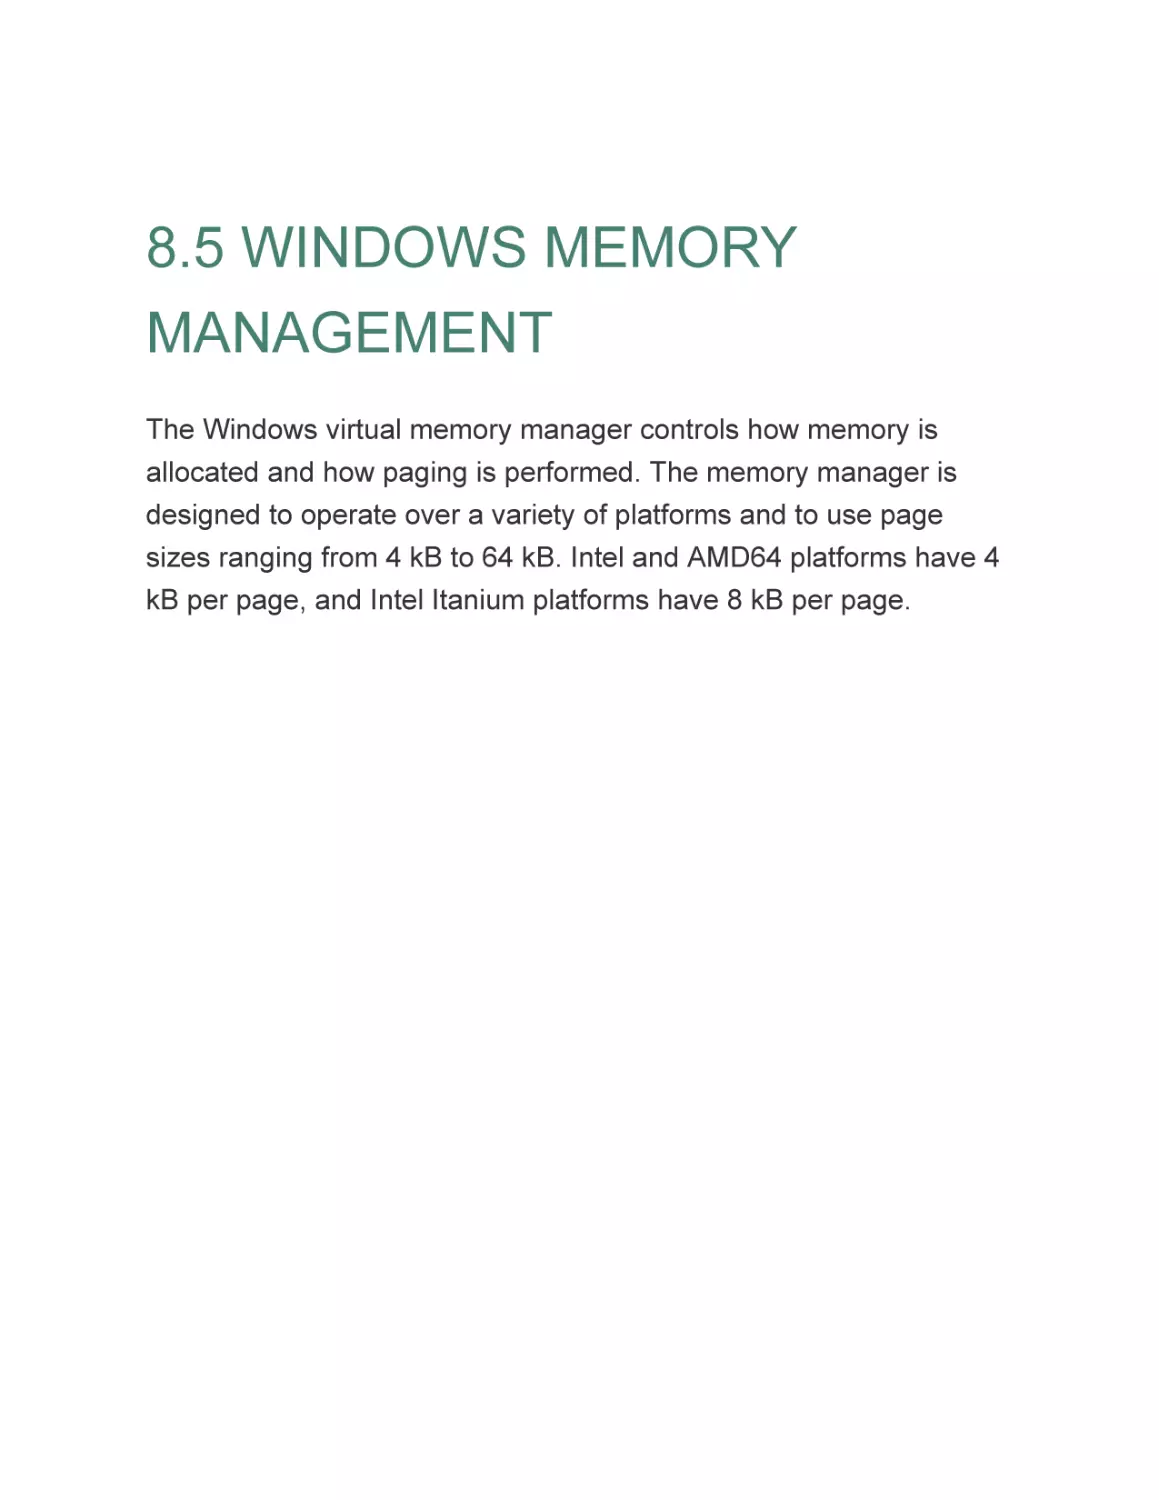 8.5 WINDOWS MEMORY MANAGEMENT